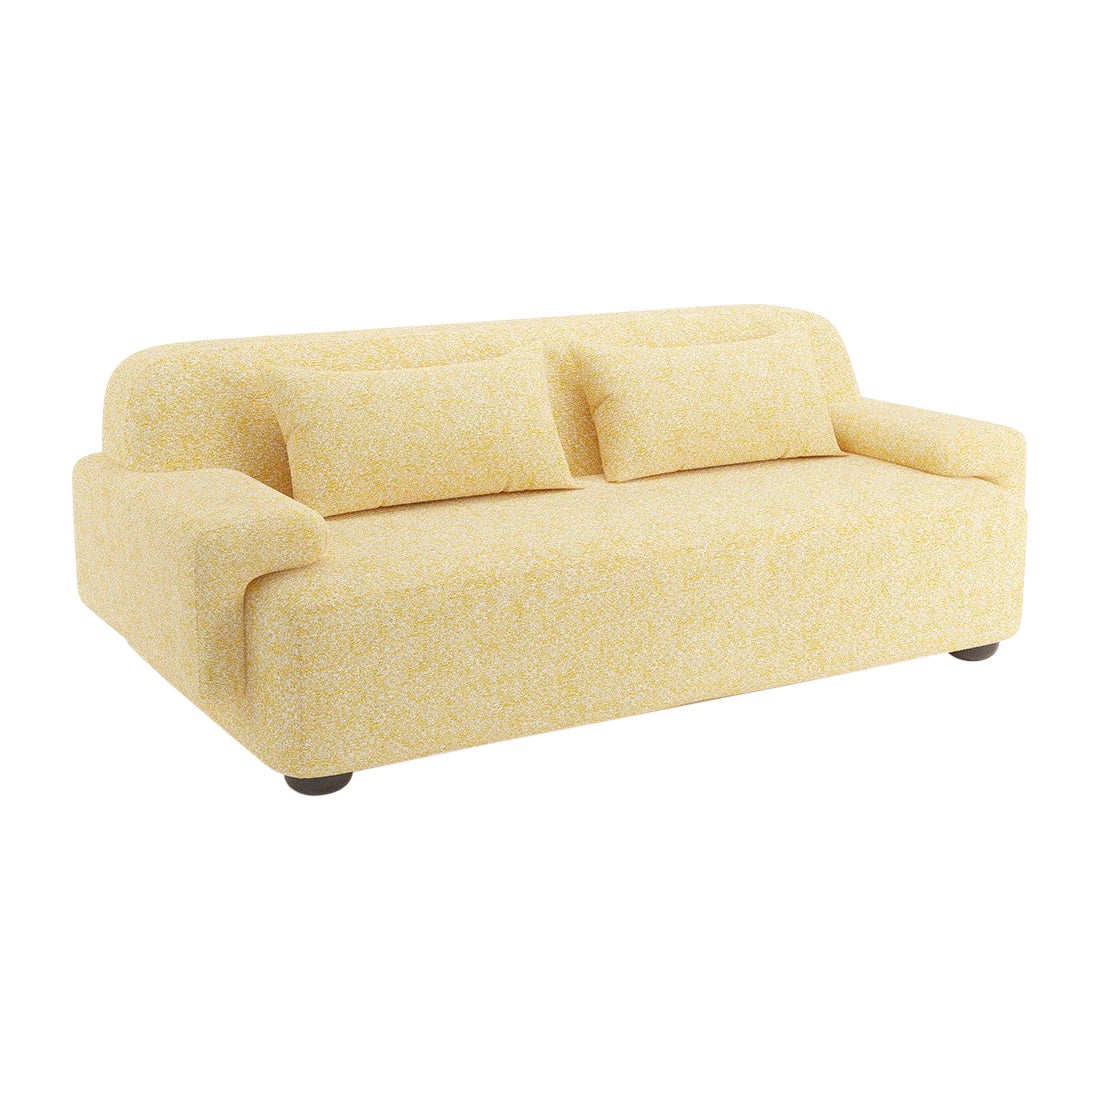 Popus Editions Lena 3 Seater Sofa in Straw Zanzi Linen & Wool Blend Fabric